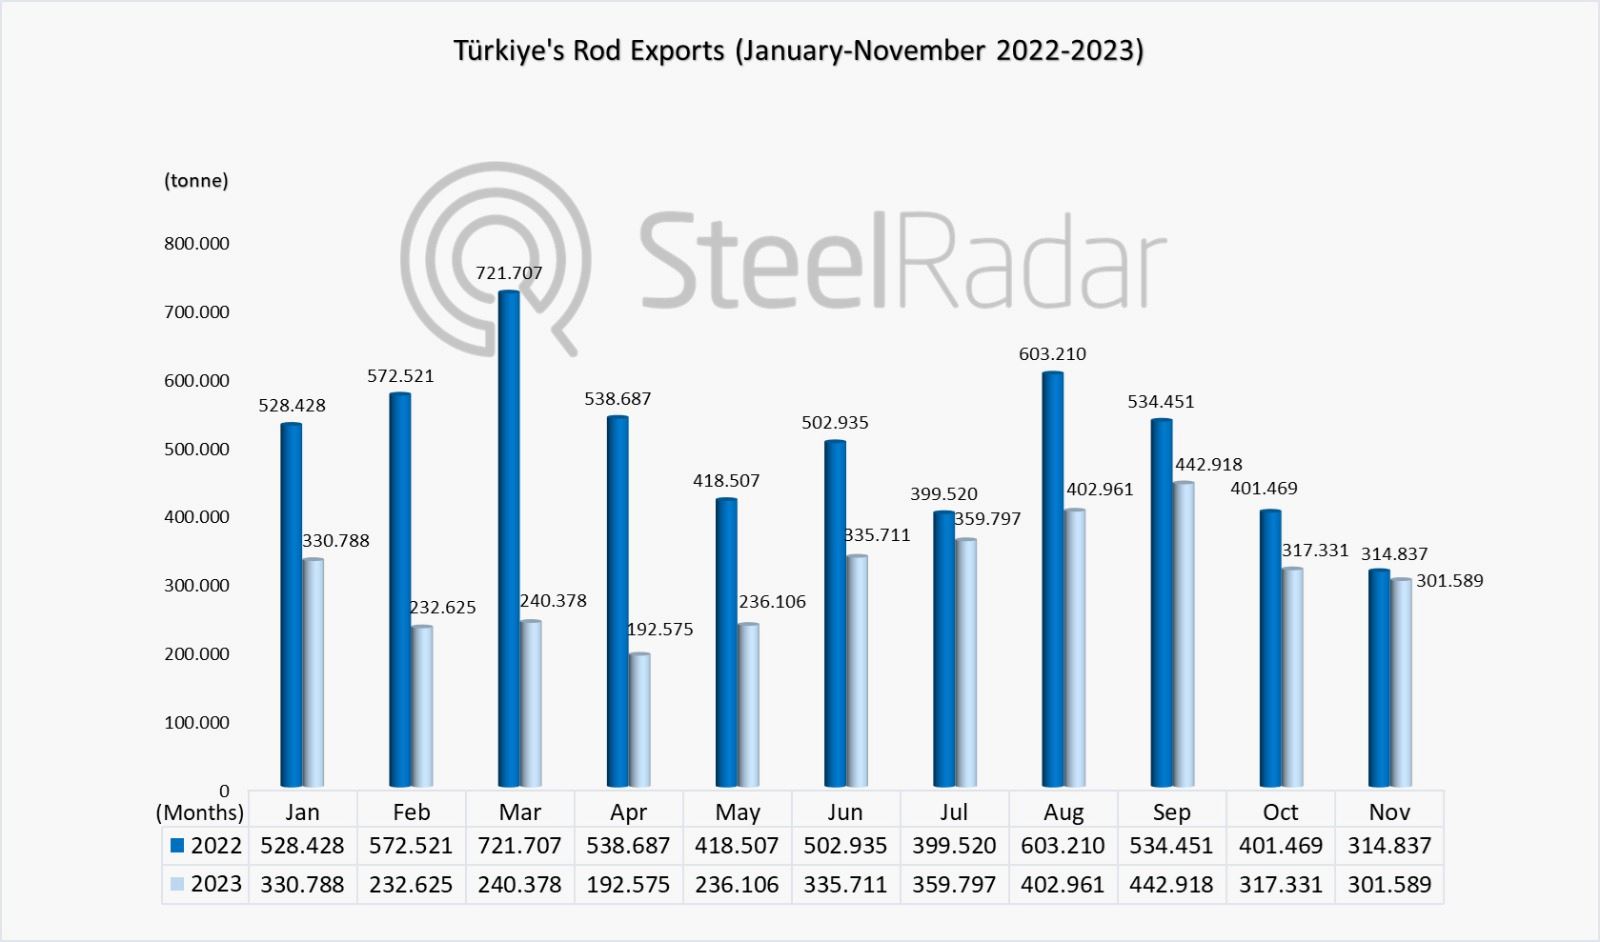 Türkiye's steel bar exports decreased by 38.72% in the January-November period